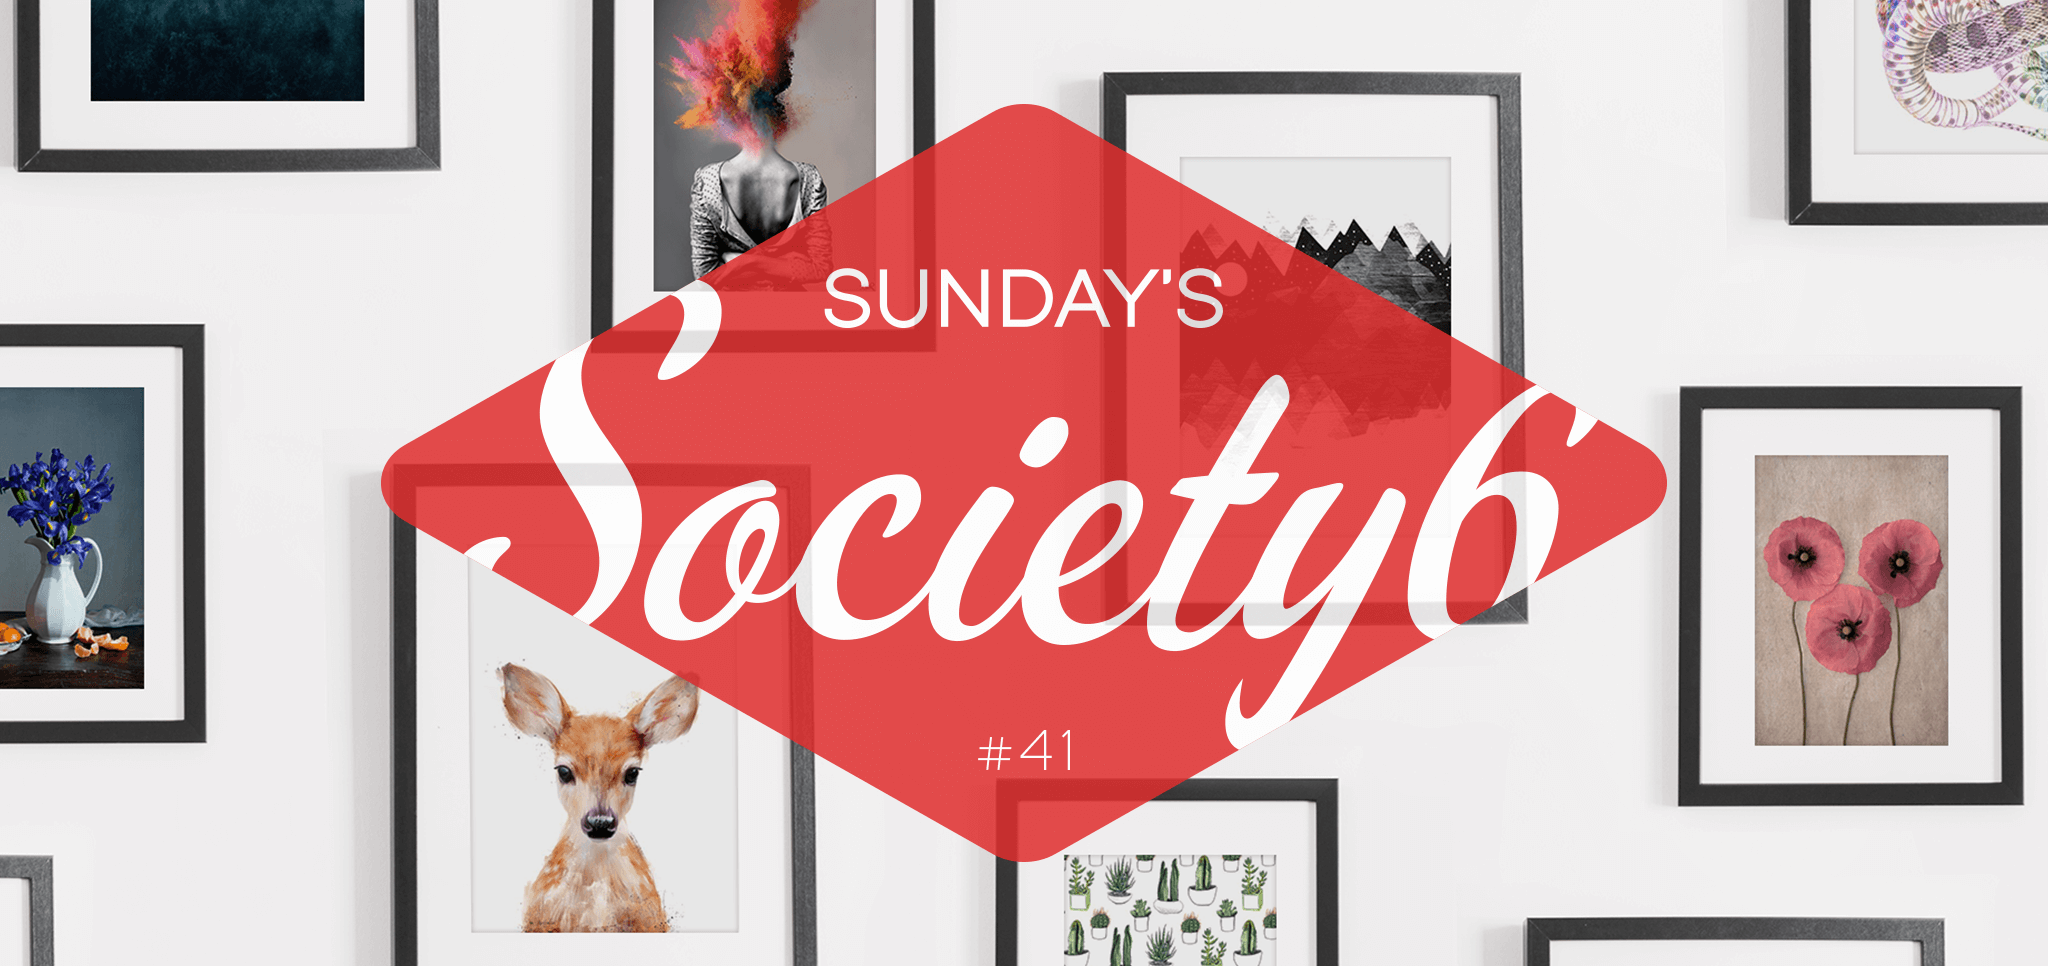 Sunday’s Society6 #41 | Seaside